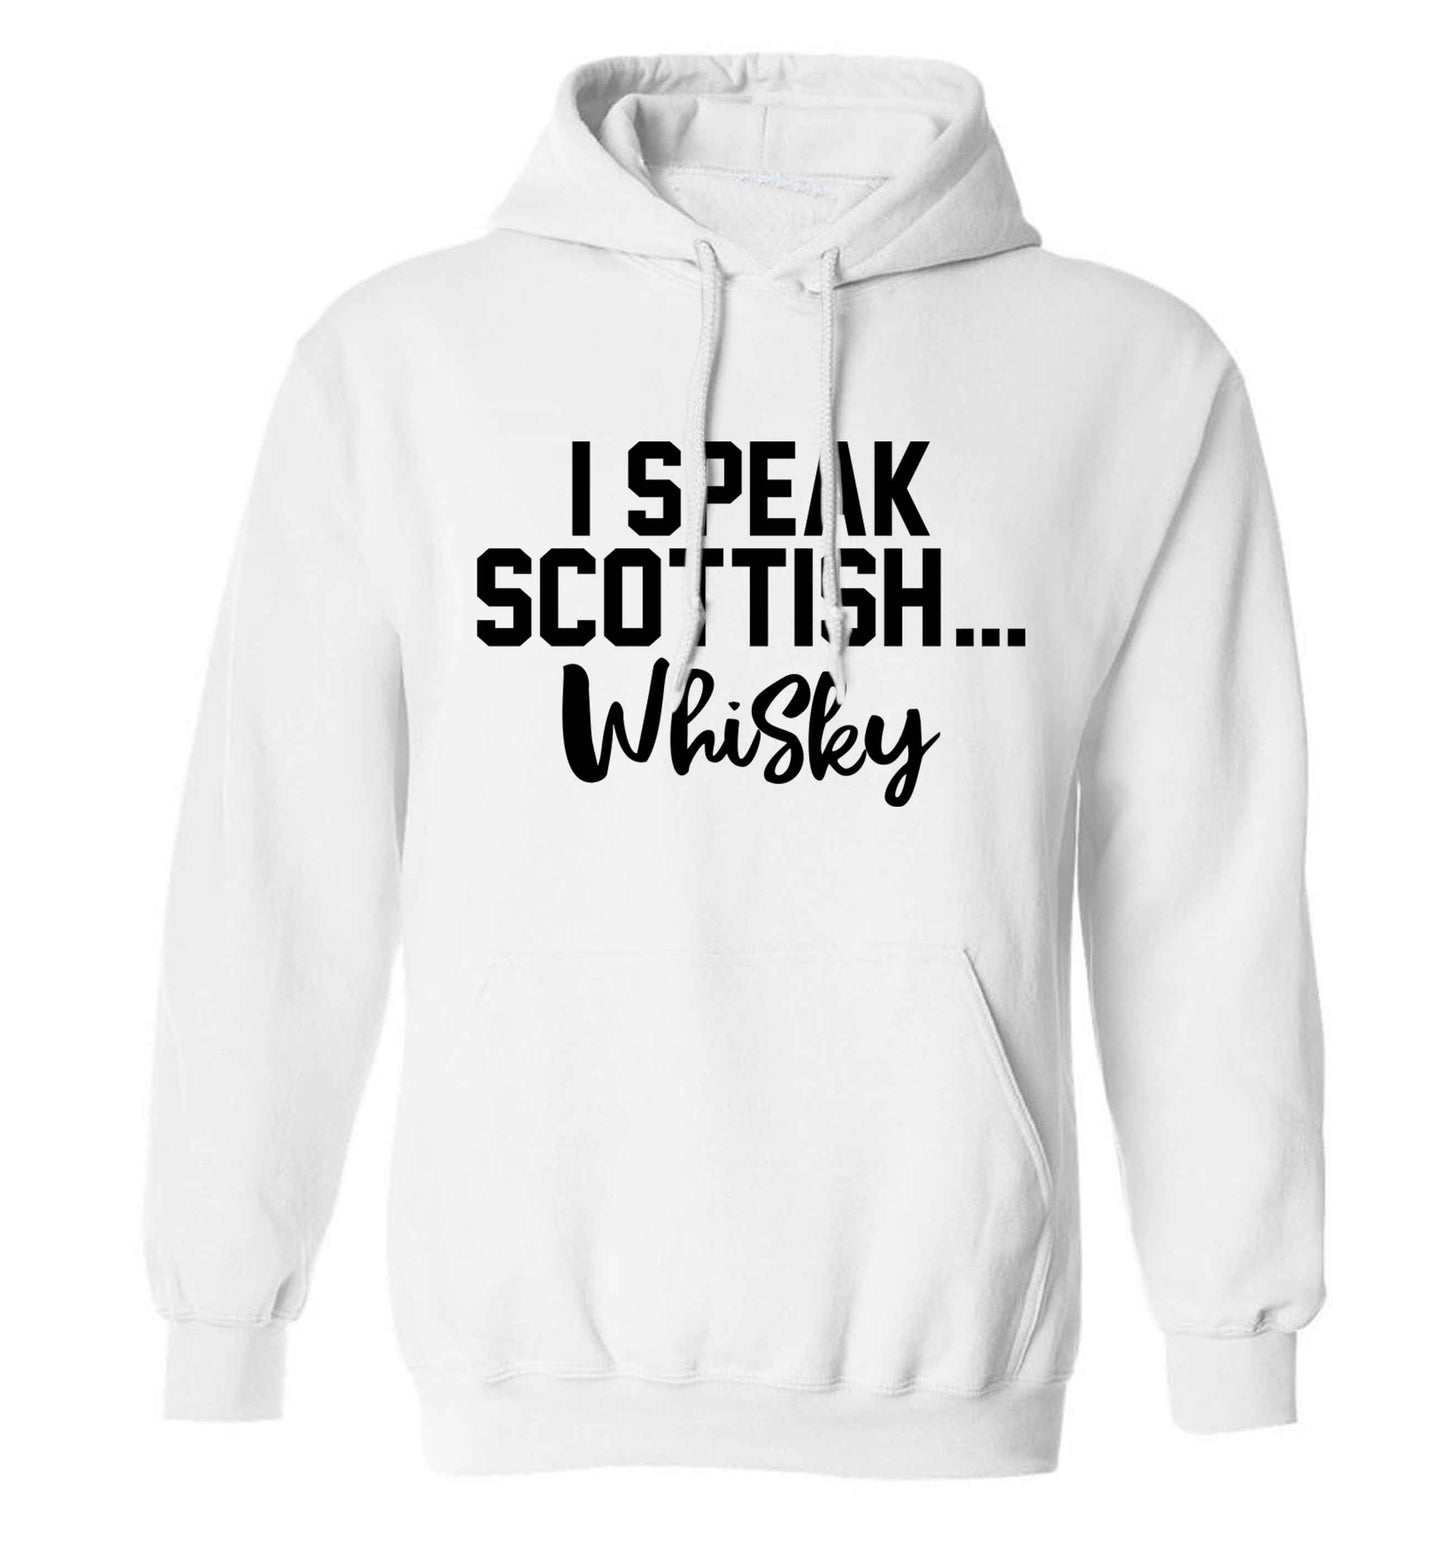 I speak scottish...whisky adults unisex white hoodie 2XL